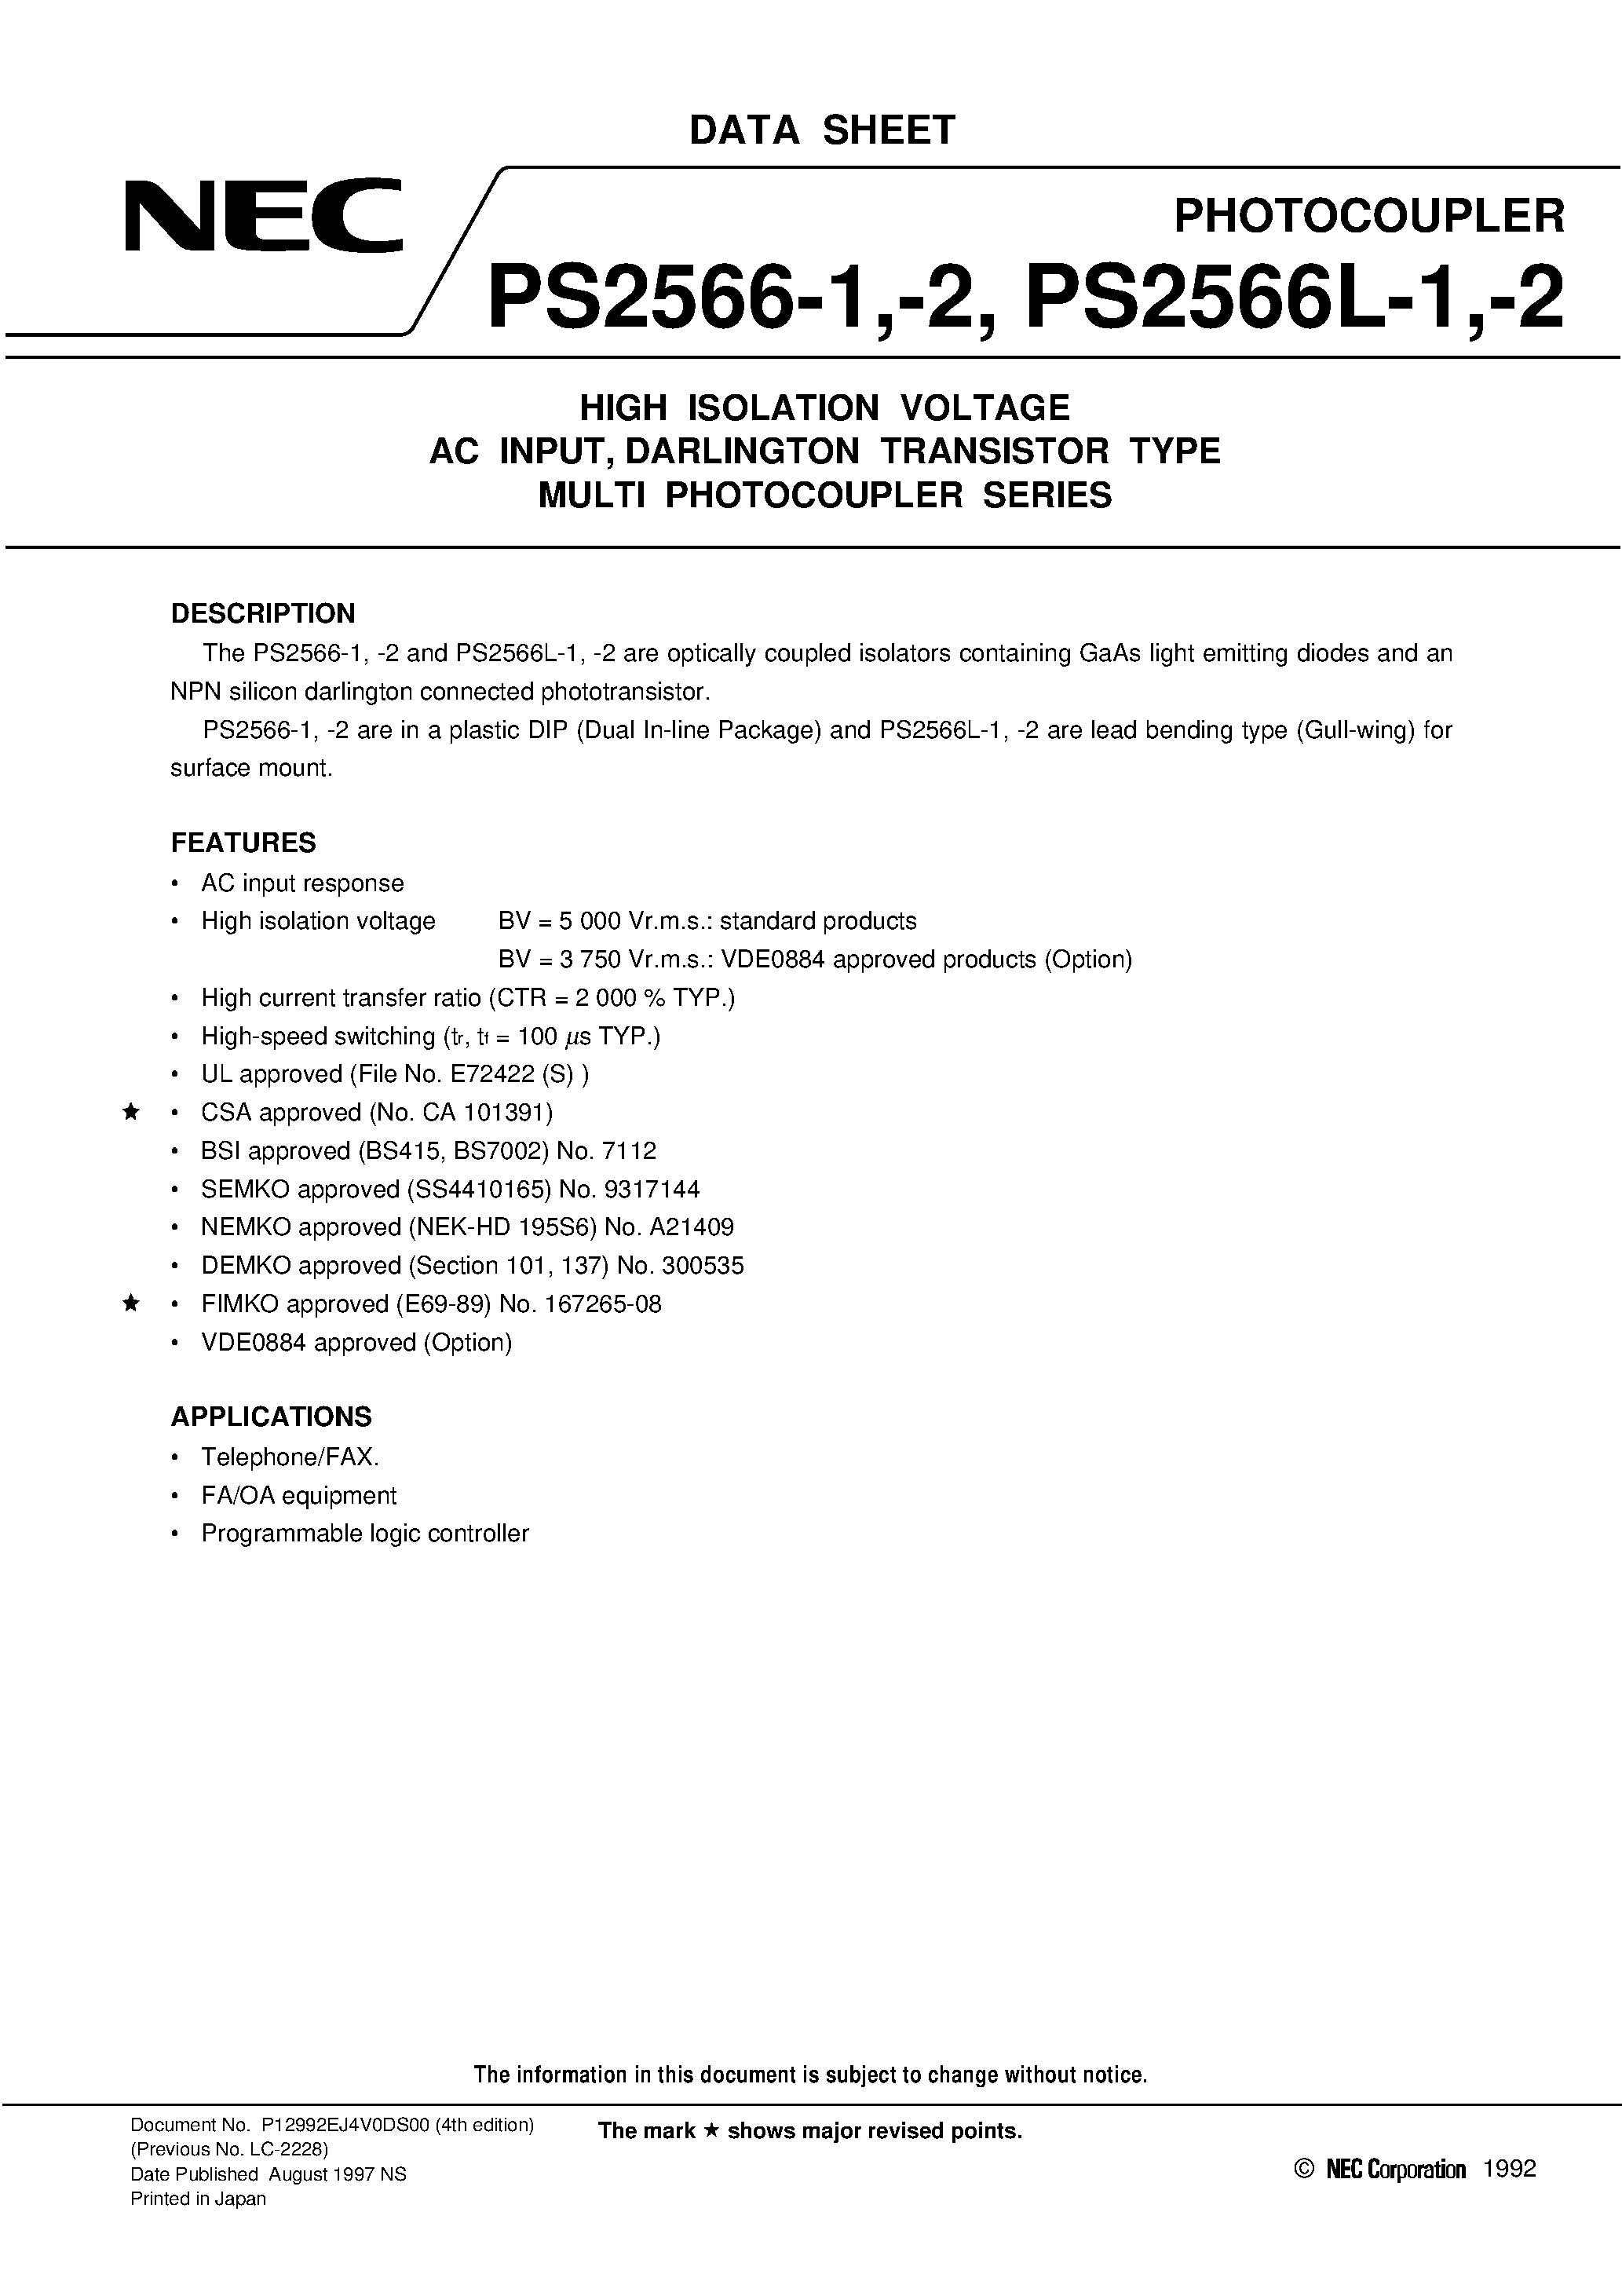 Datasheet PS2566-2-V - HIGH ISOLATION VOLTAGE AC INPUT / DARLINGTON TRANSISTOR TYPE MULTI PHOTOCOUPLER SERIES page 1